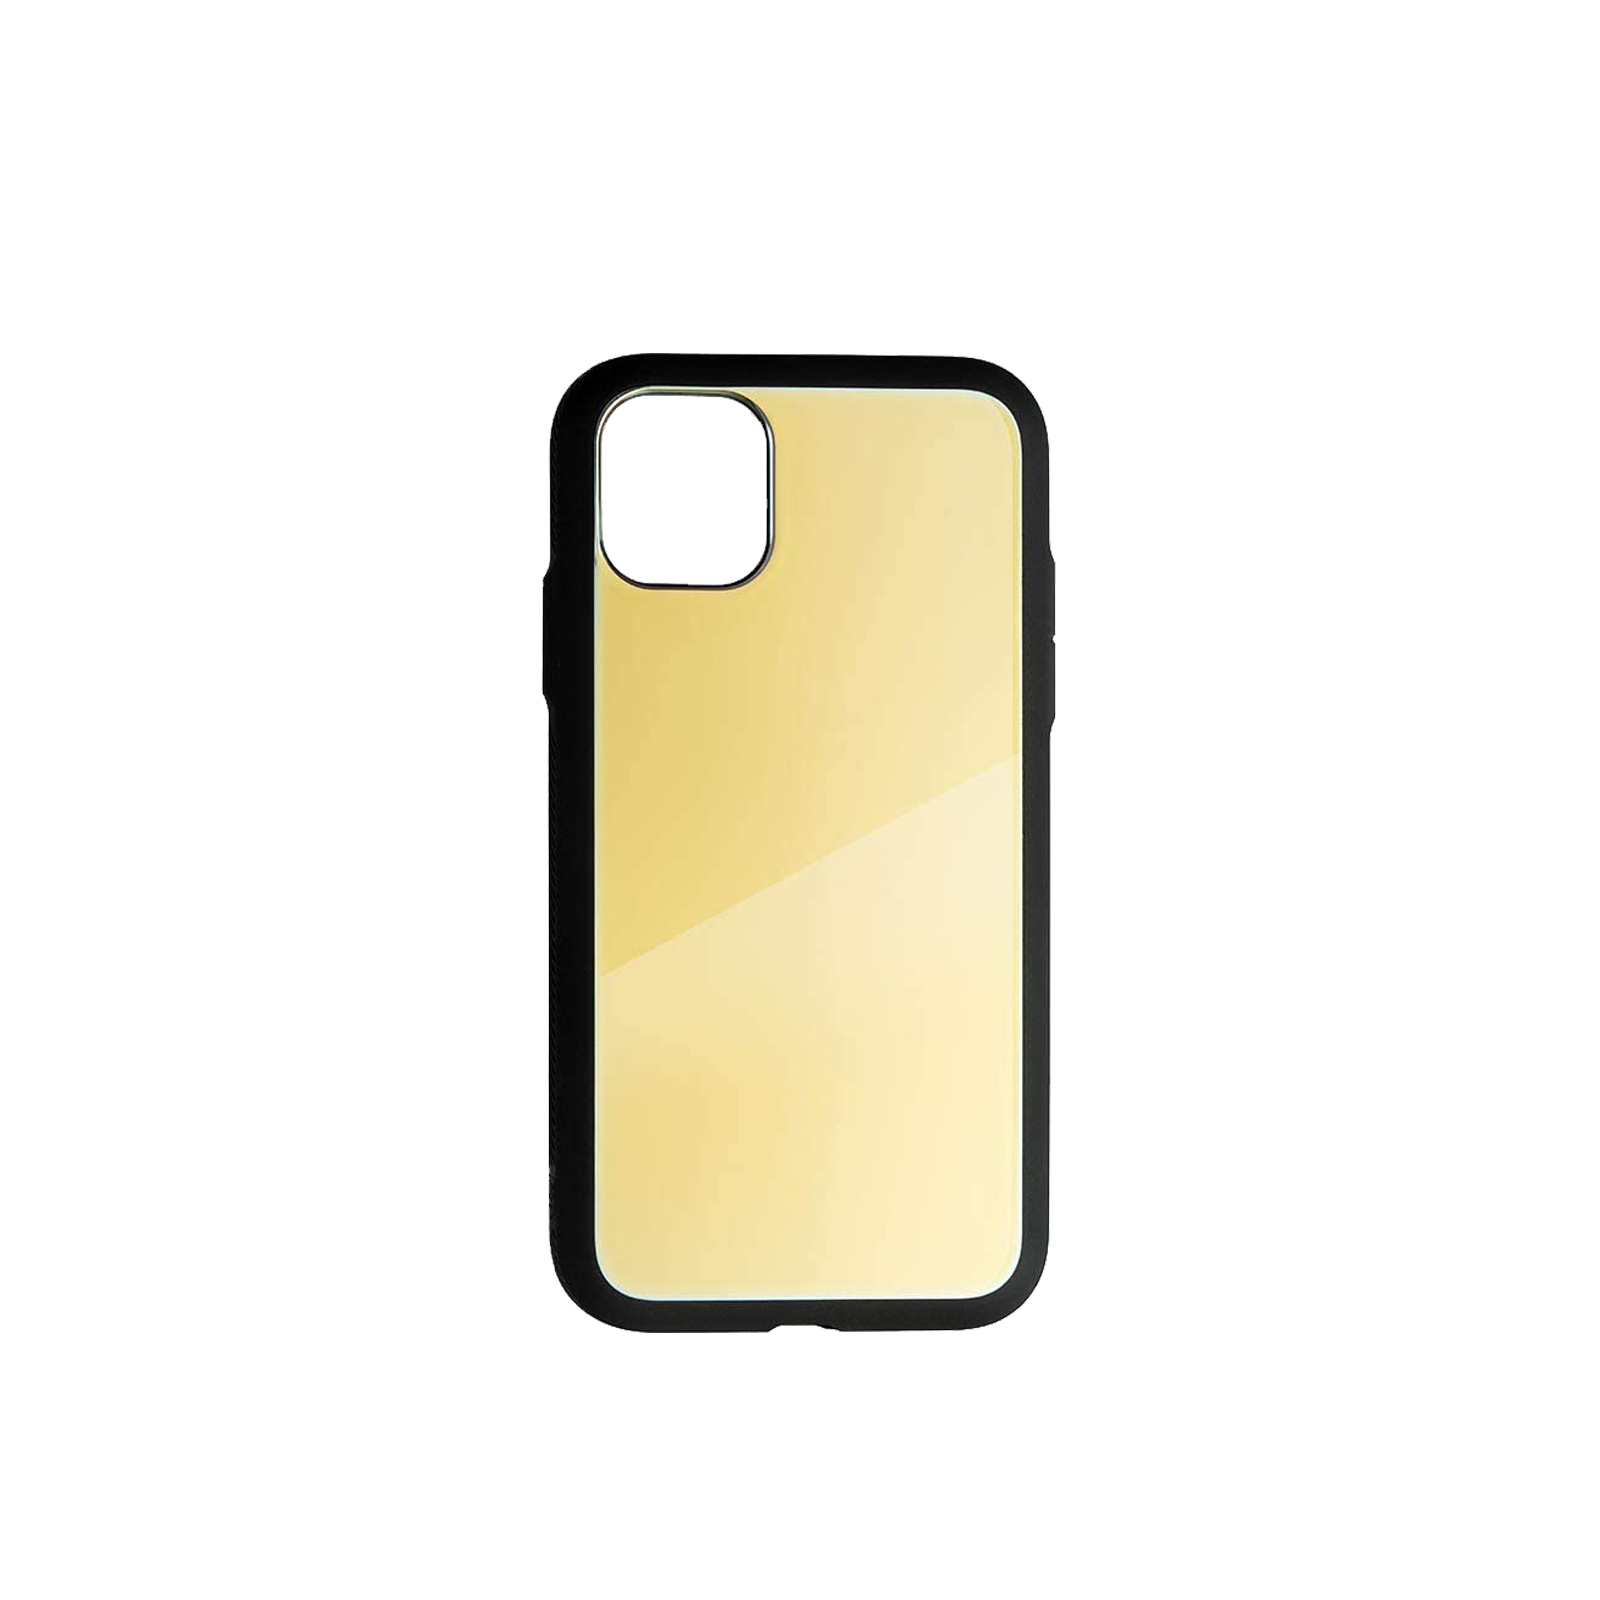 ParadigmGriPhone iPhone 11Pro Max Case [Black / Yellow]